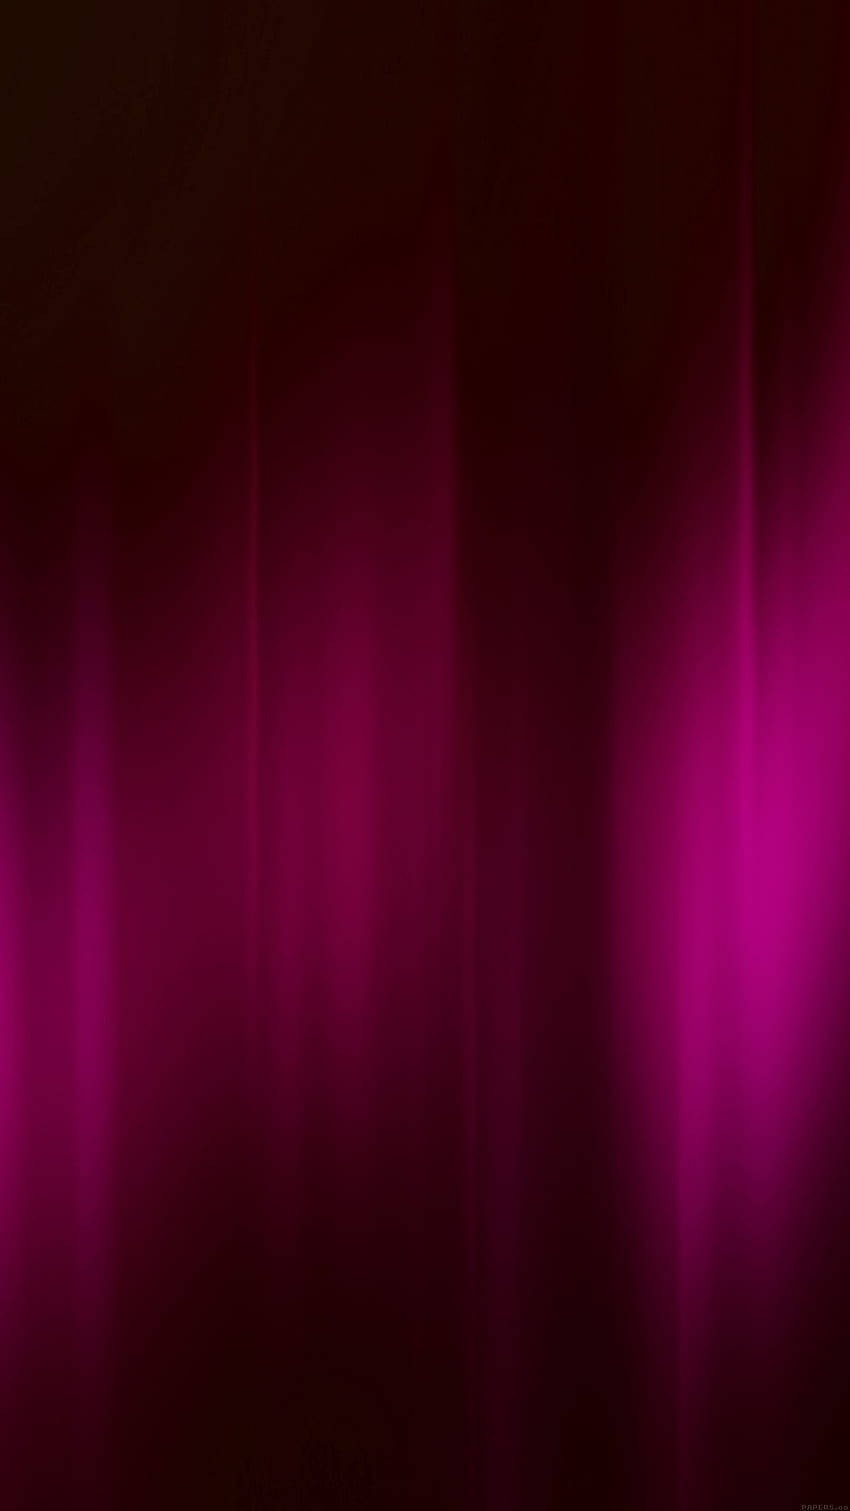 Retro Moden Red Abstract Pattern Android, Android púrpura rosa oscuro fondo de pantalla del teléfono